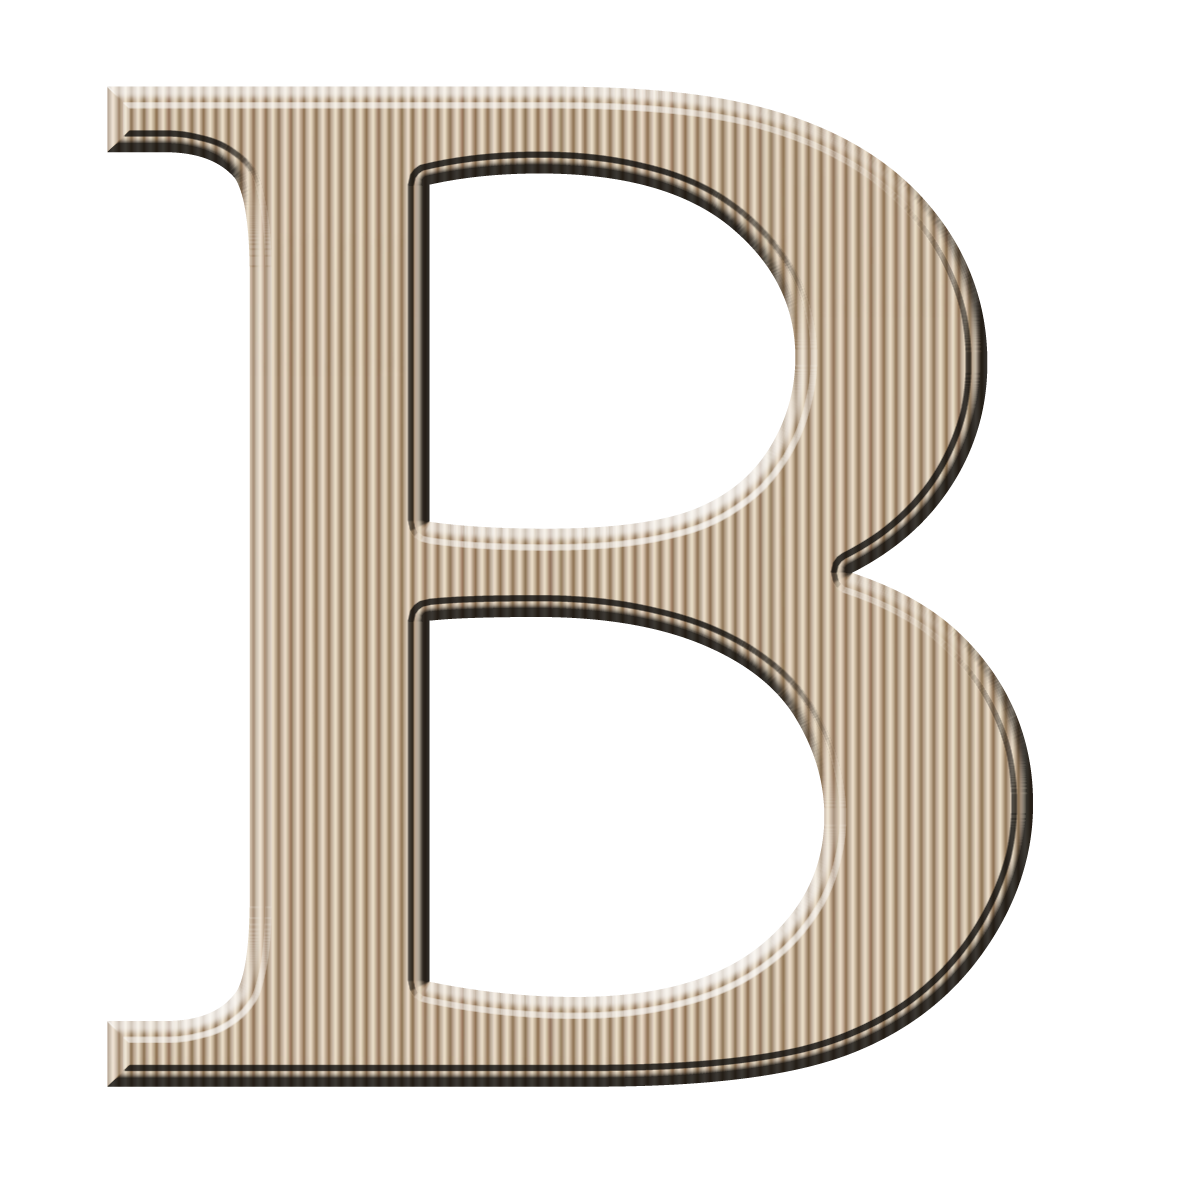 4 Best Images of Printable Capital Letter B Large Single Alphabet